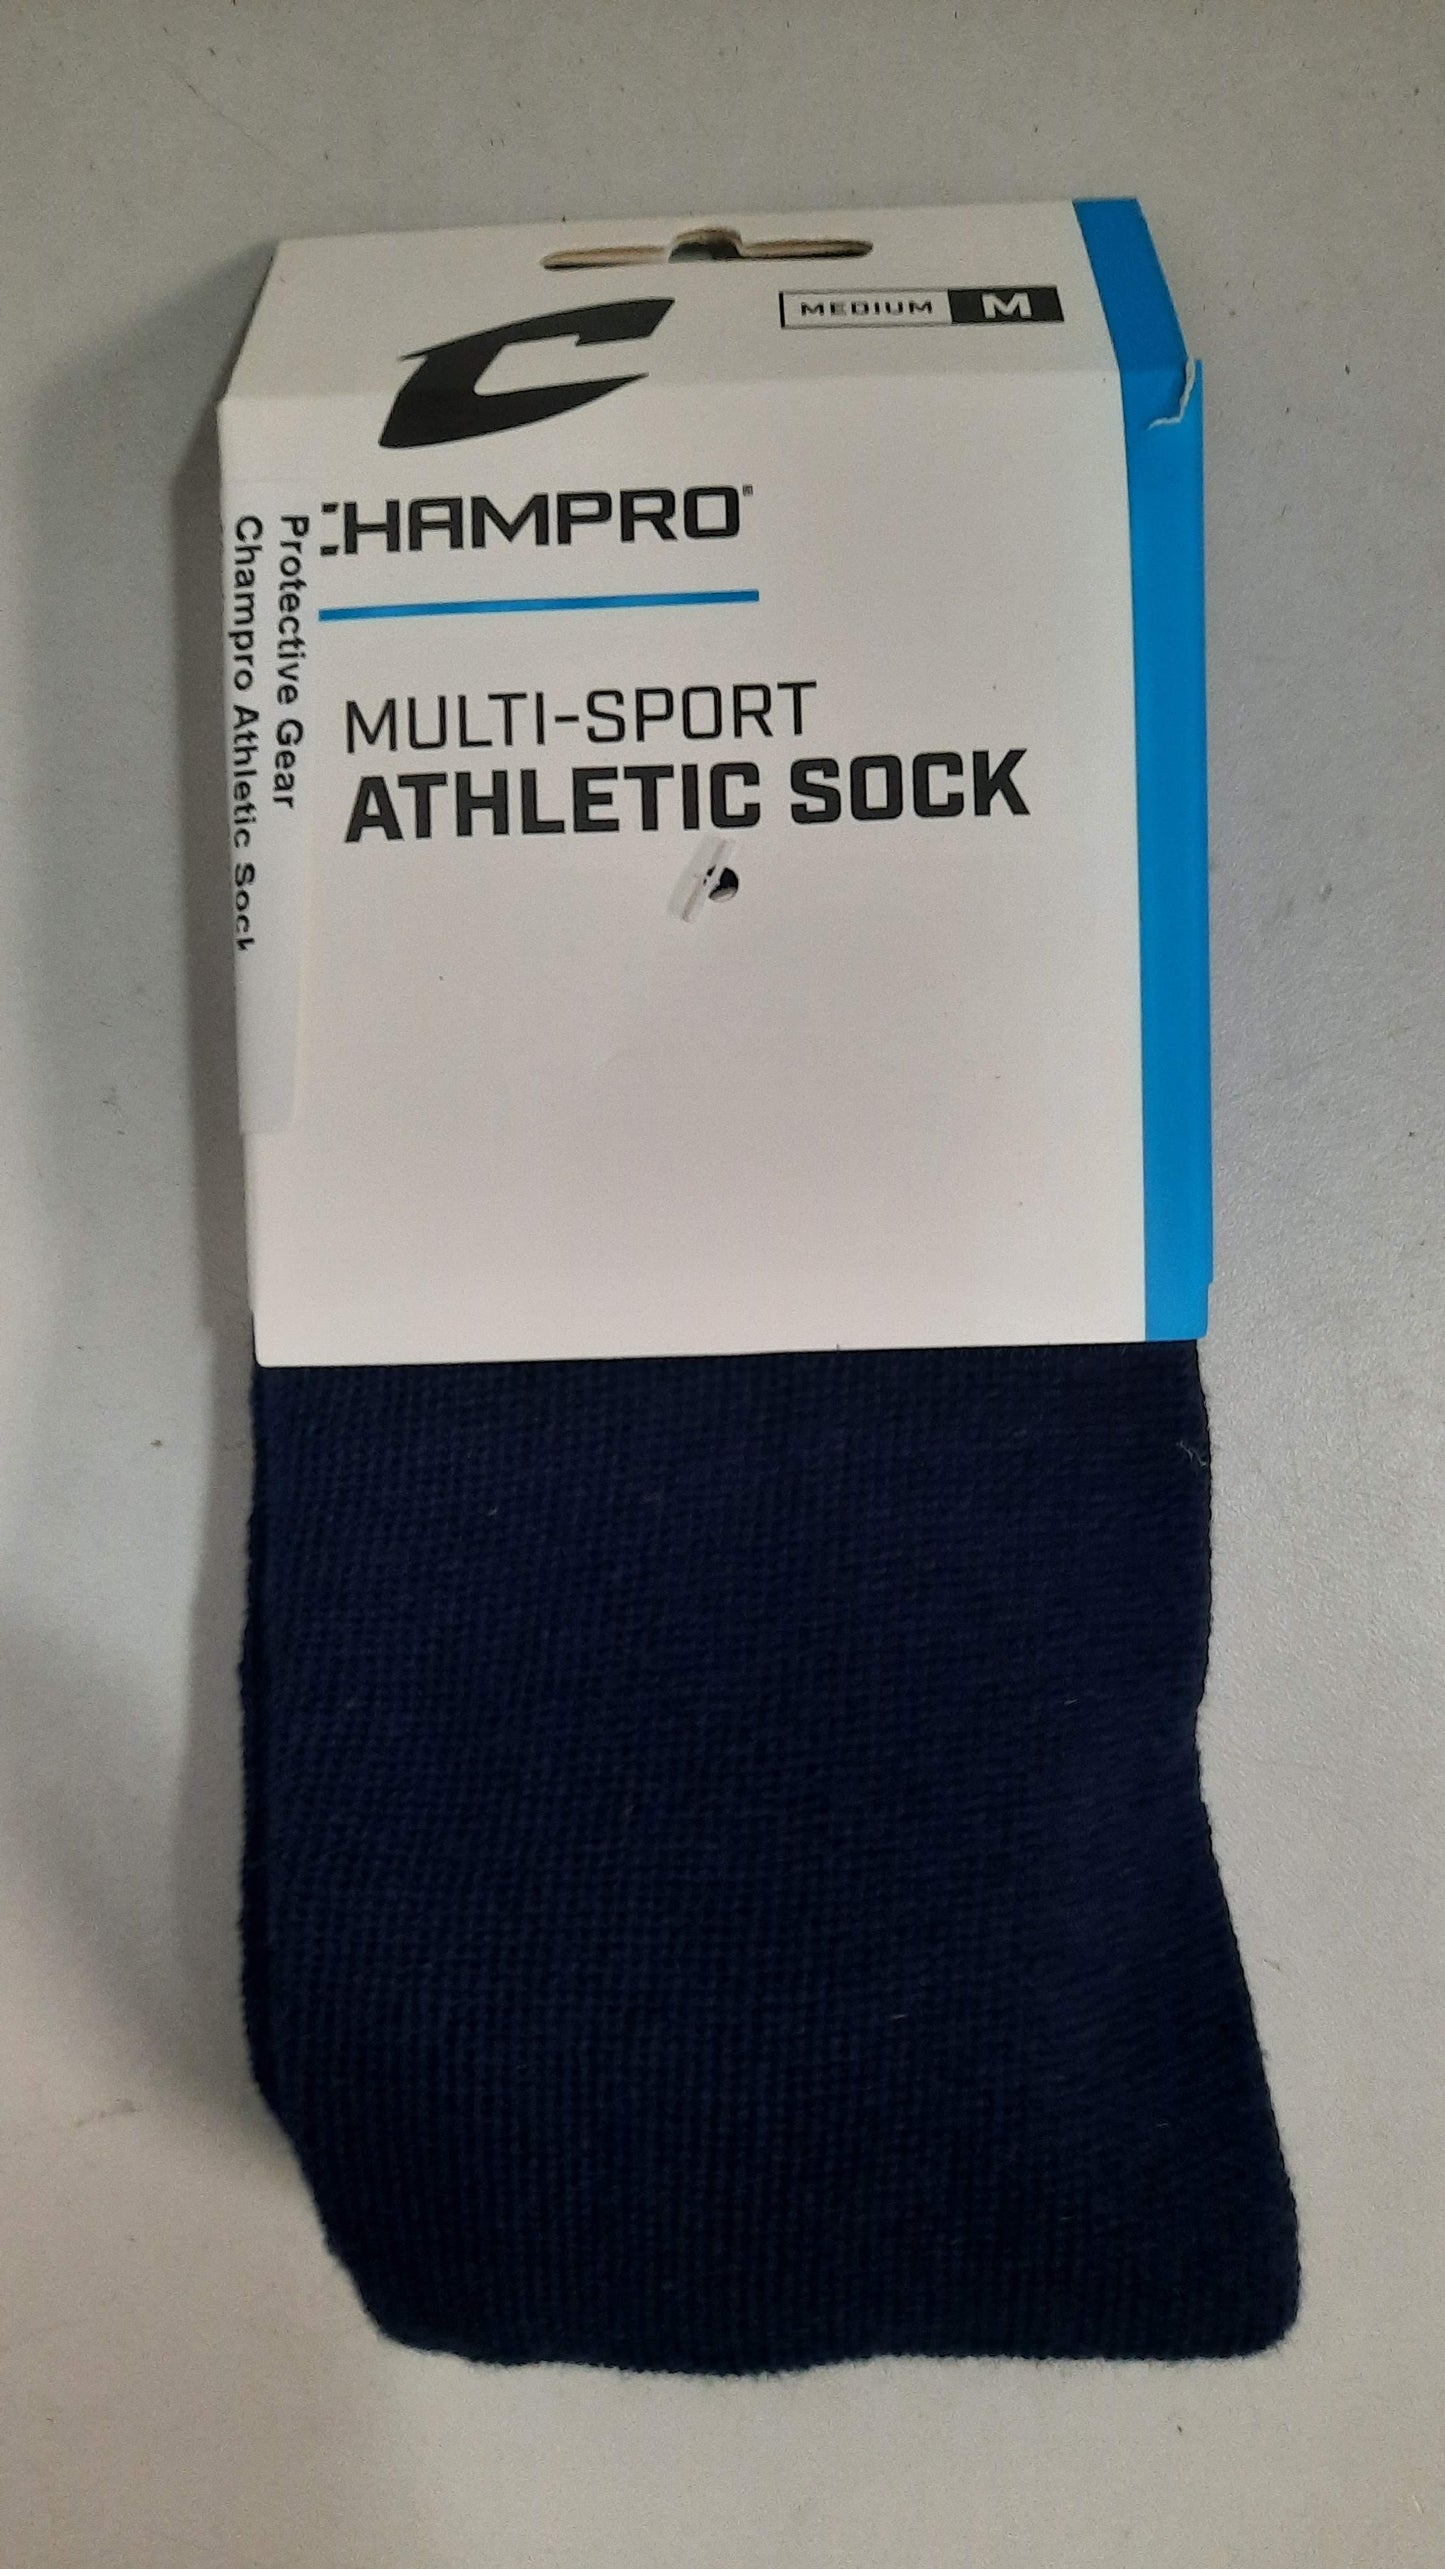 Champro Athletic Socks Size Medium Color Navy Blue Multi-Sport Condition New